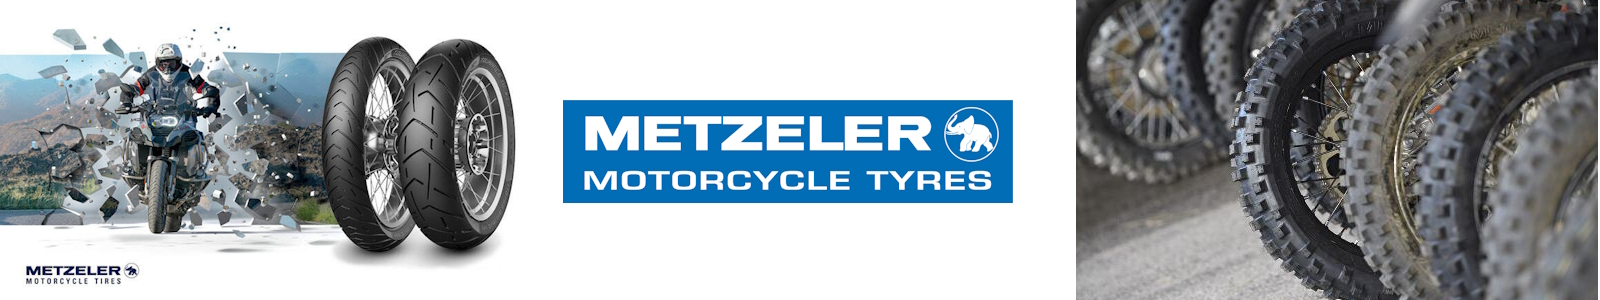 Neumáticos para moto scooter Metzeler